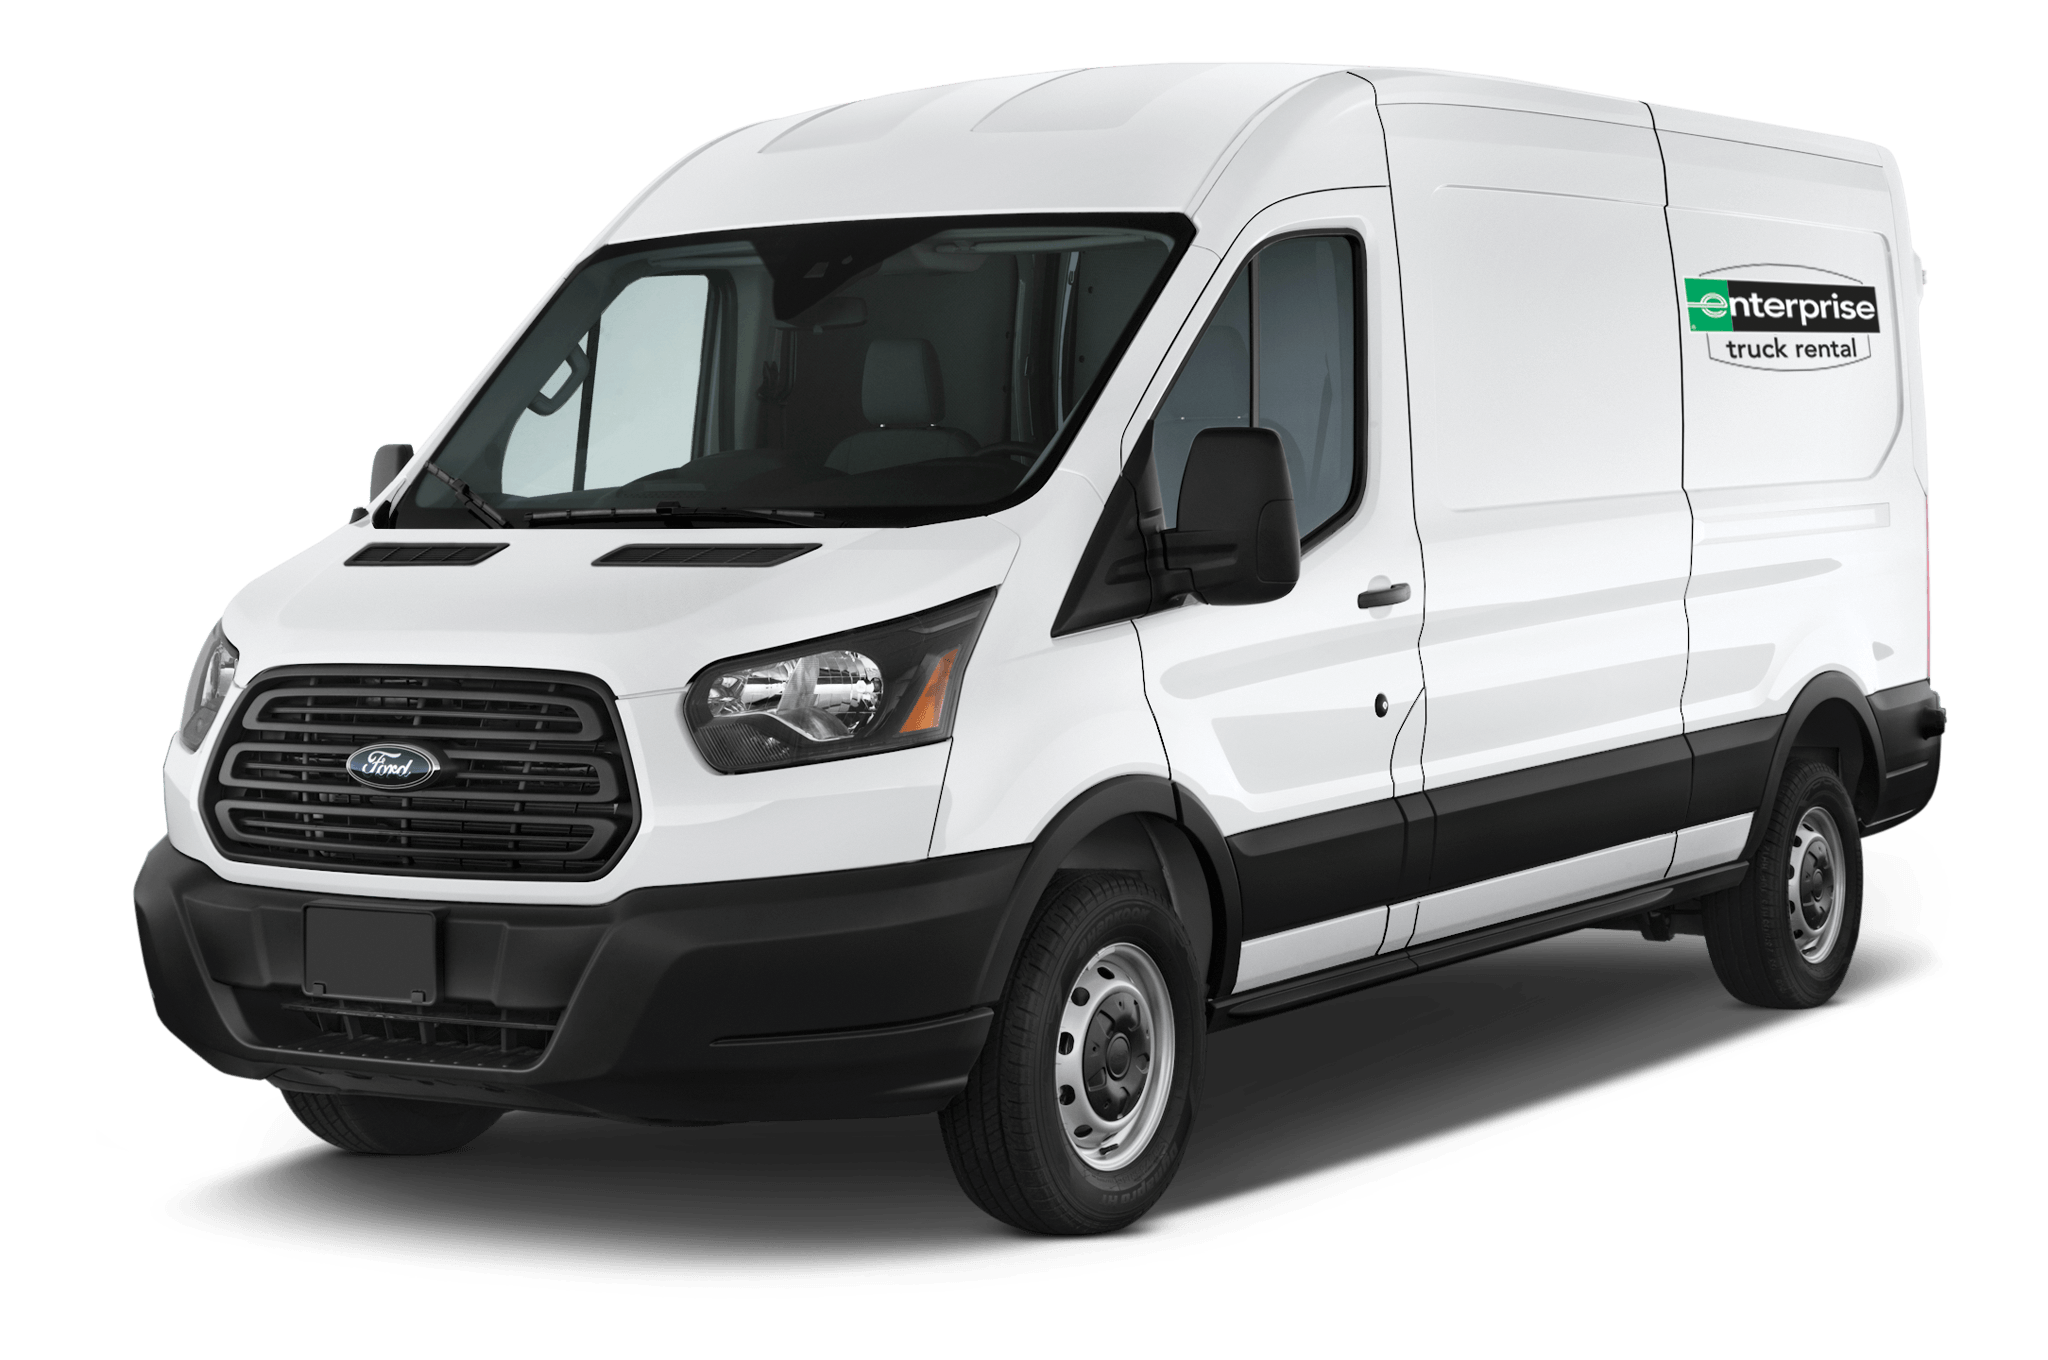 Enterprise Truck Rental in Saint-Hubert